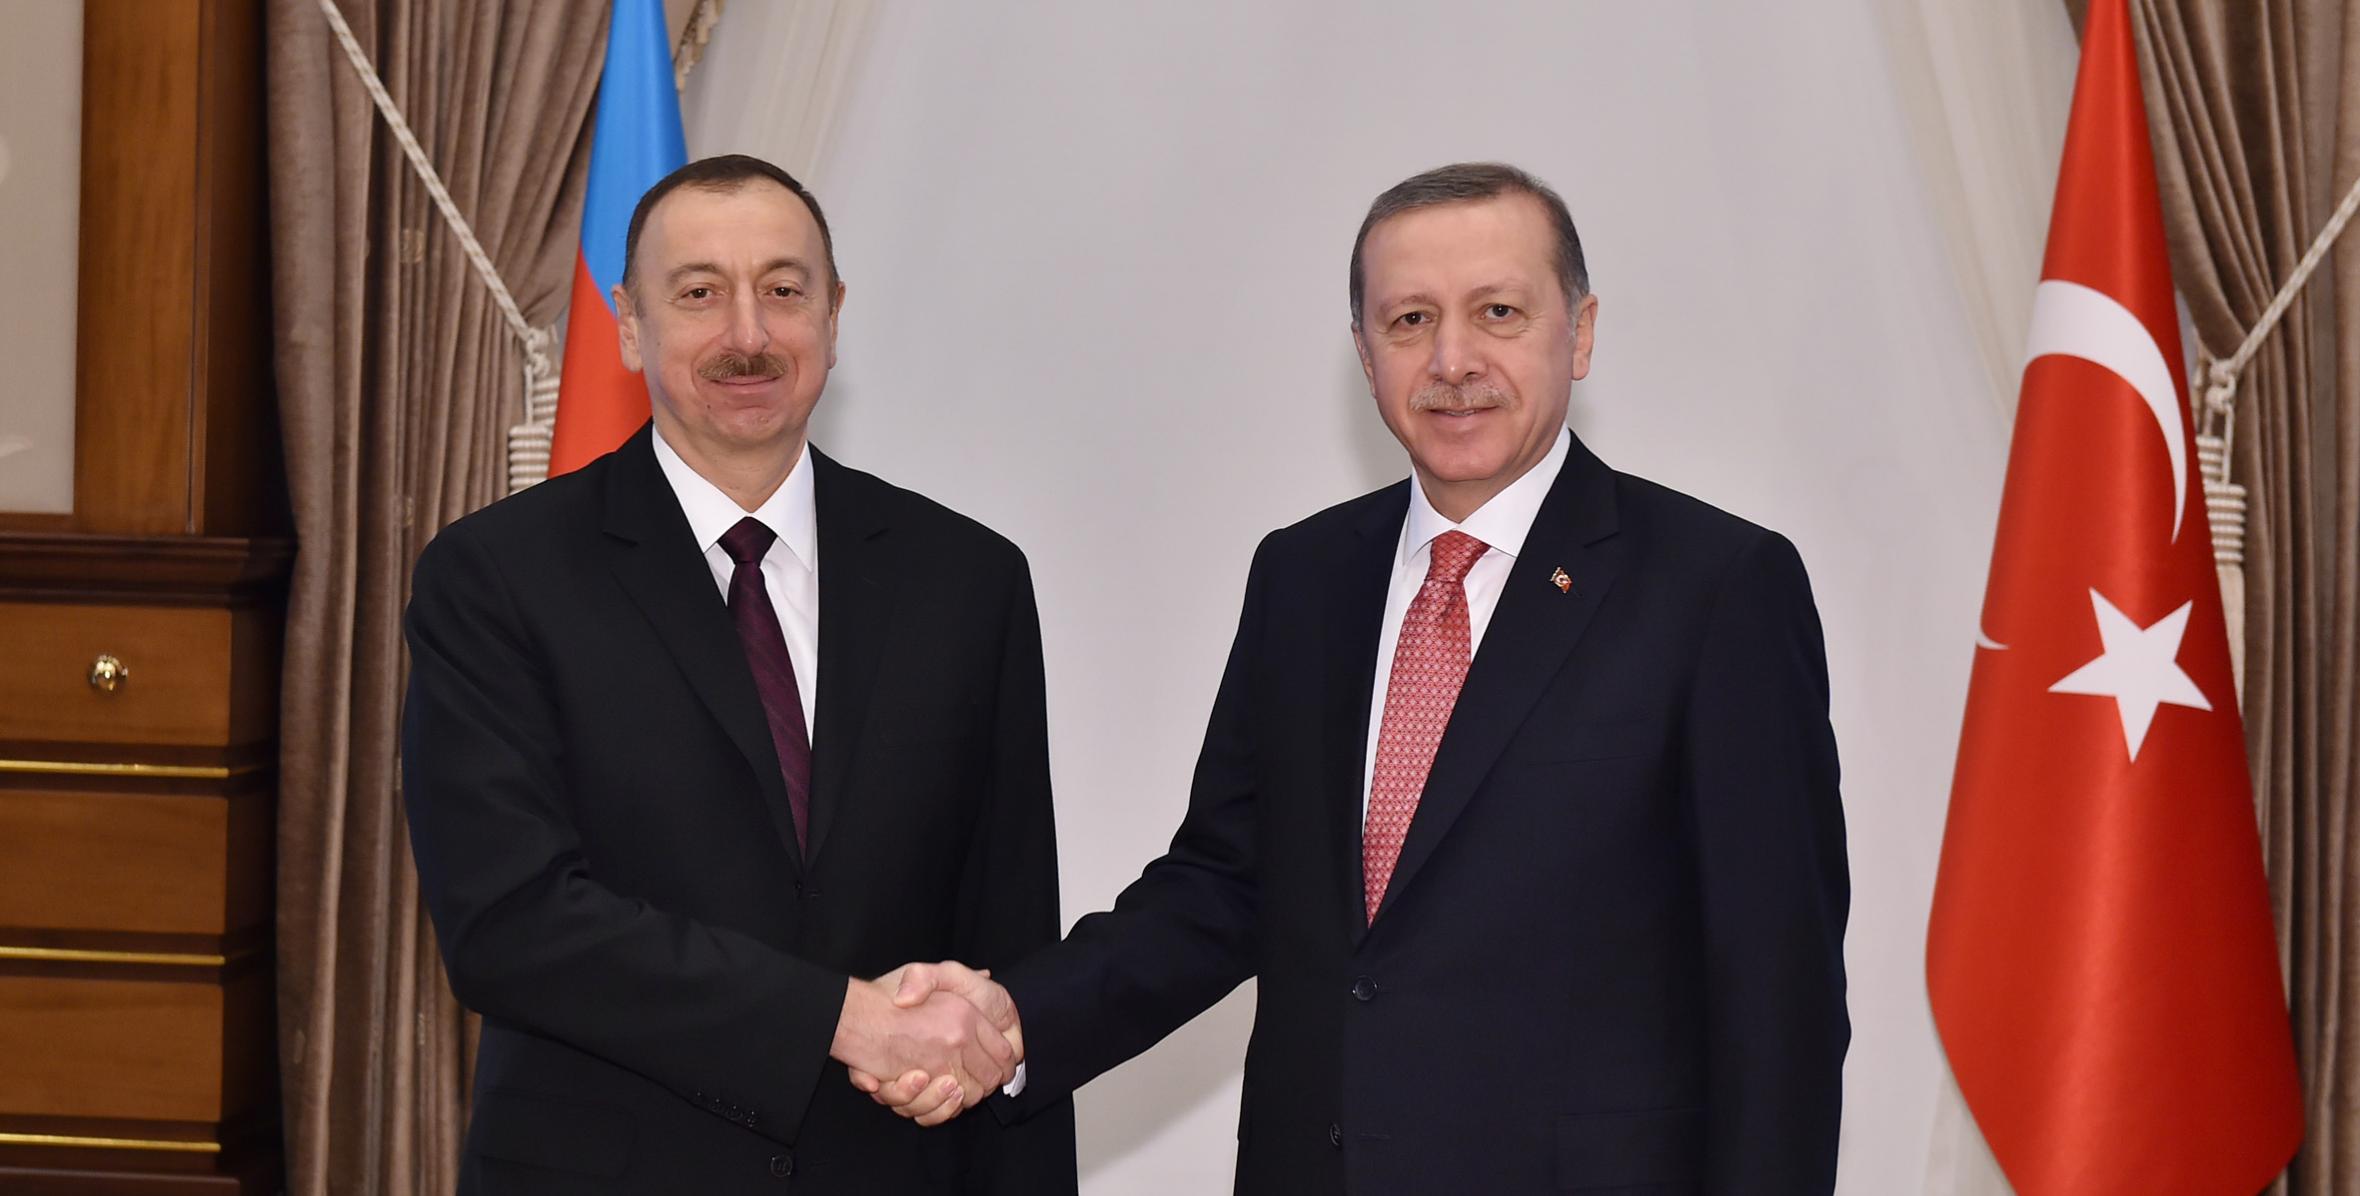 Ilham Aliyev and President of Turkey Recep Tayyip Erdogan held a one-on-one meeting